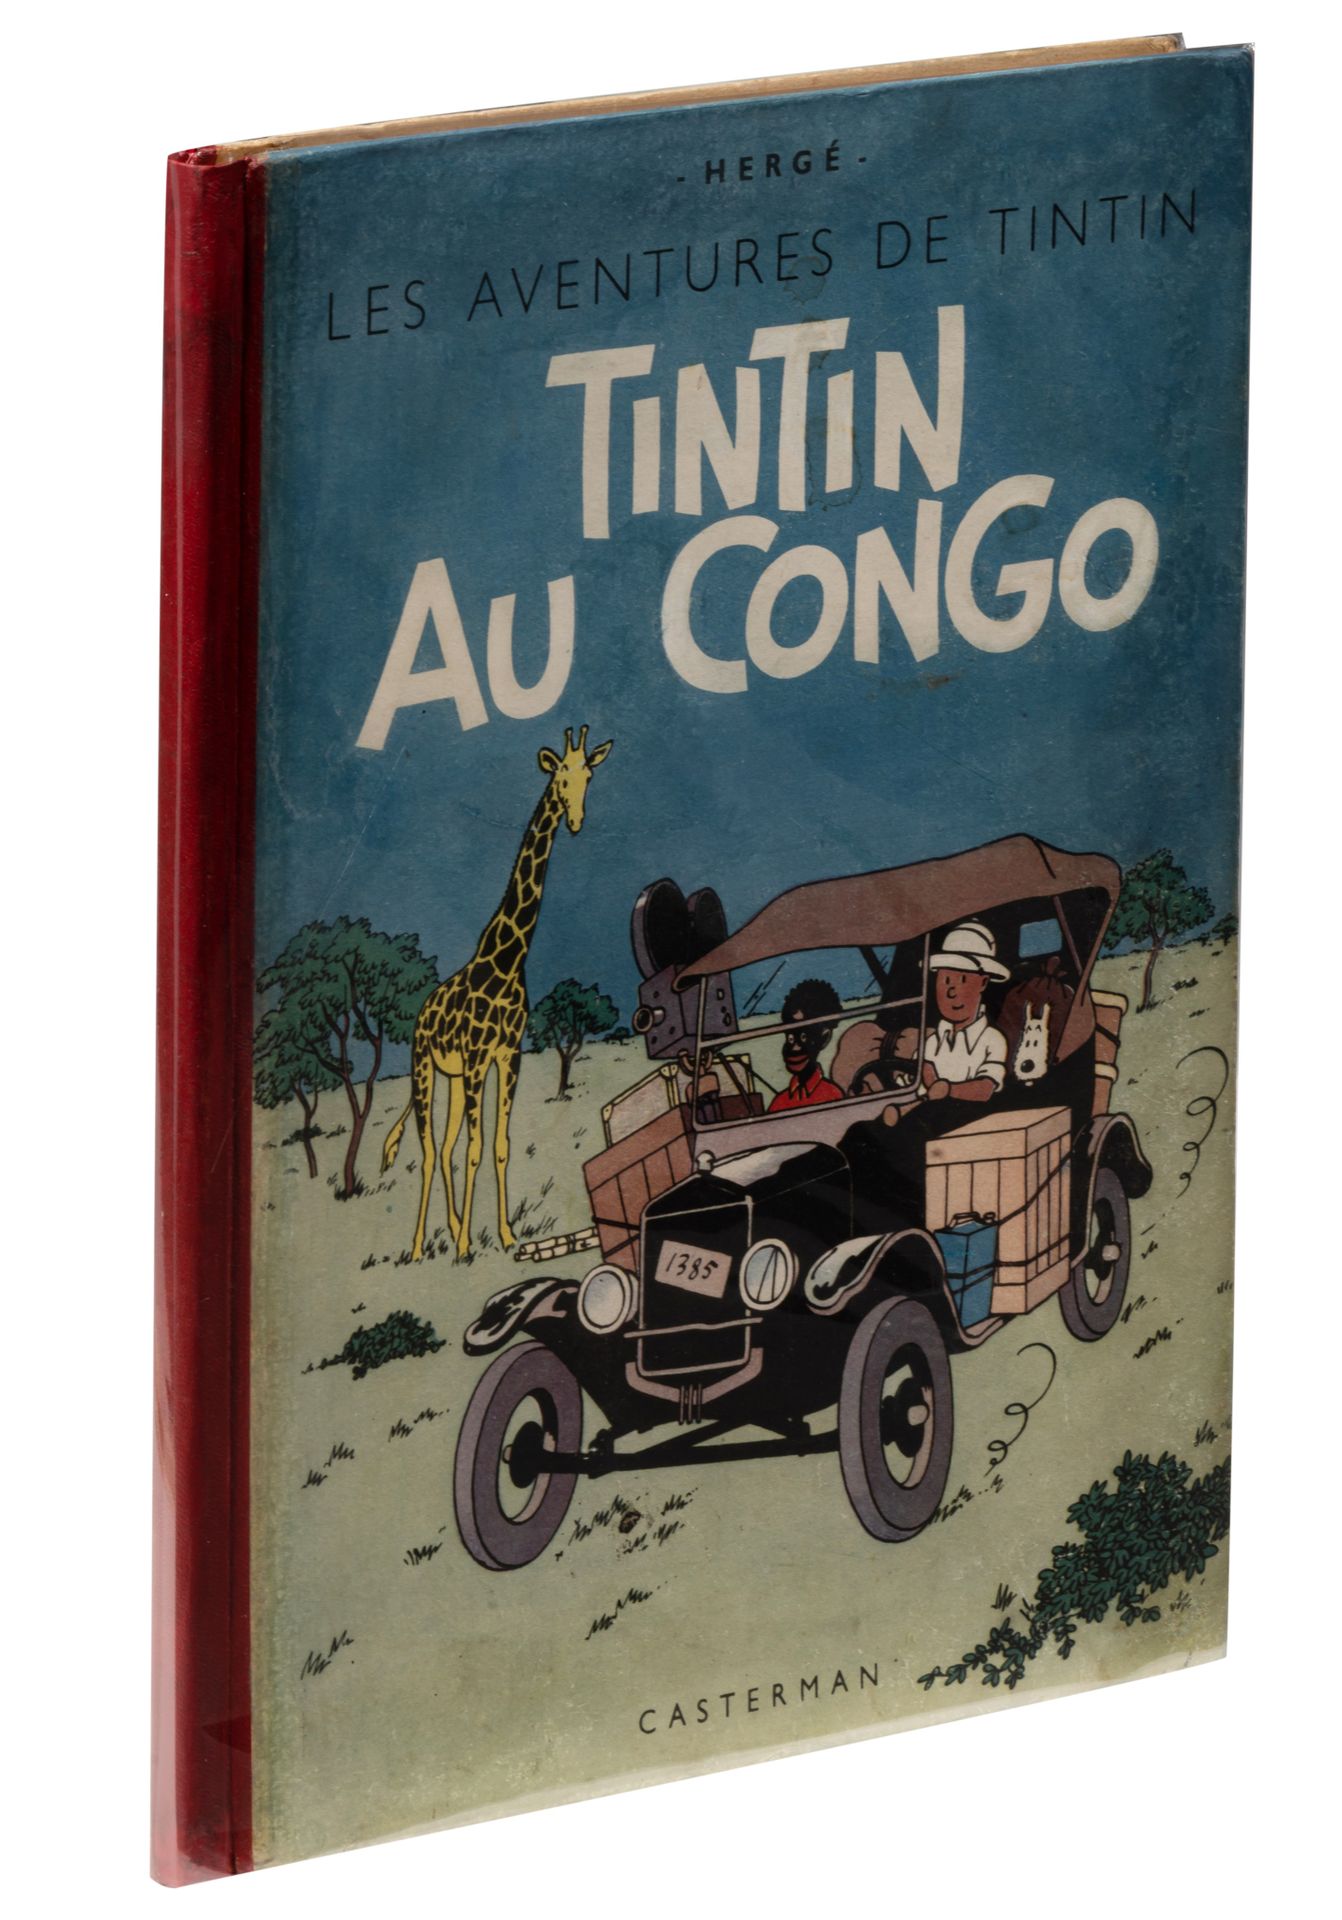 Hergé (1907-1983), 'Tintin au Congo', 1942 赫热（1907-1983），《丁丁在刚果》，1942年
Les Avent&hellip;